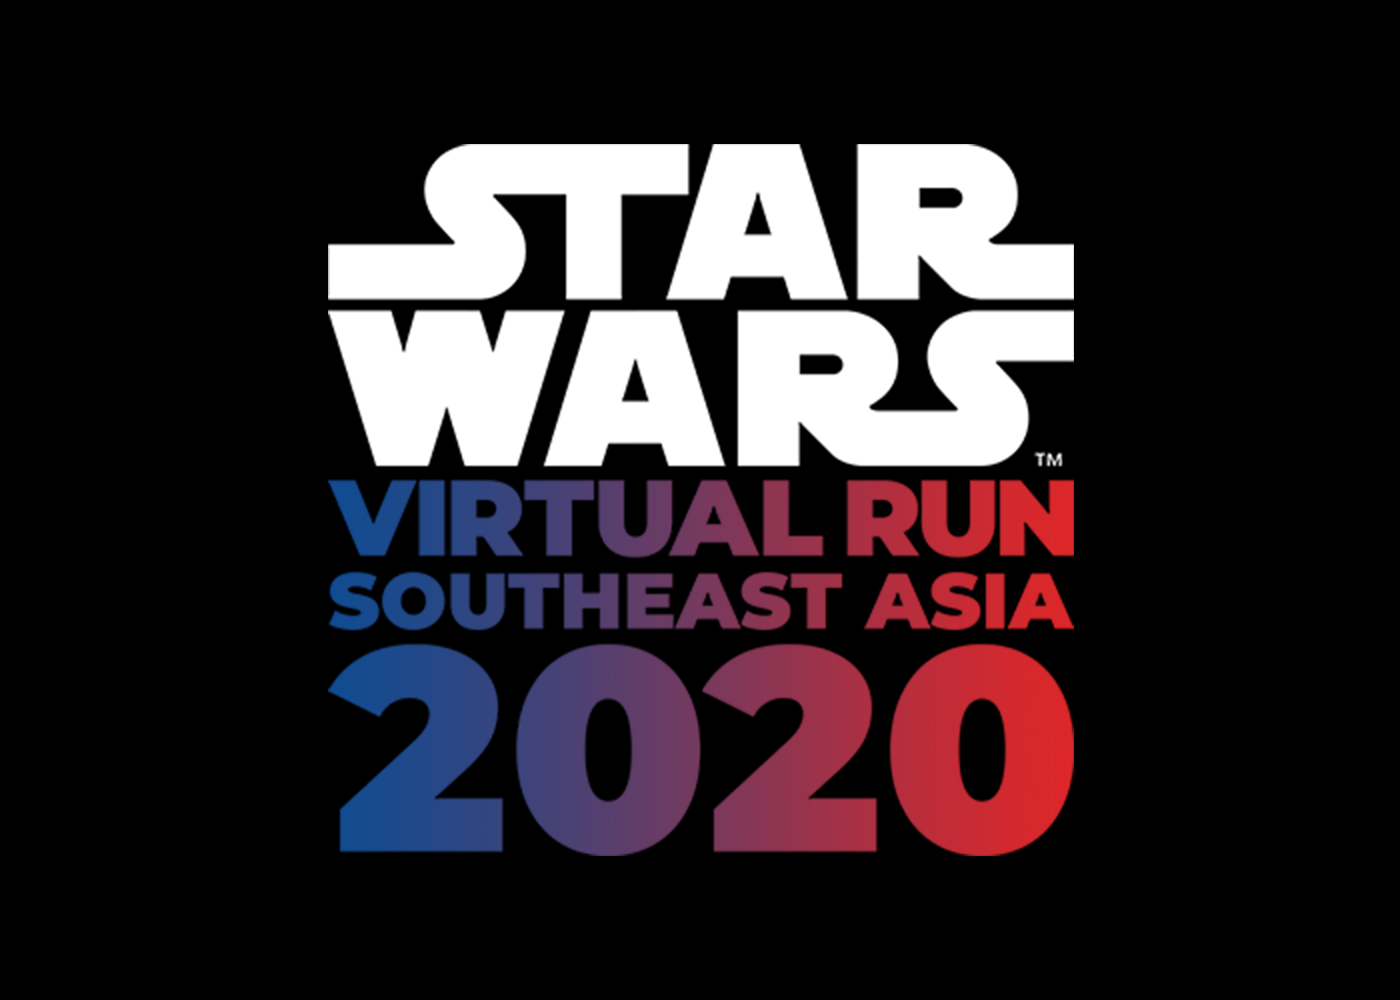 STAR WARS Virtual Run 2020